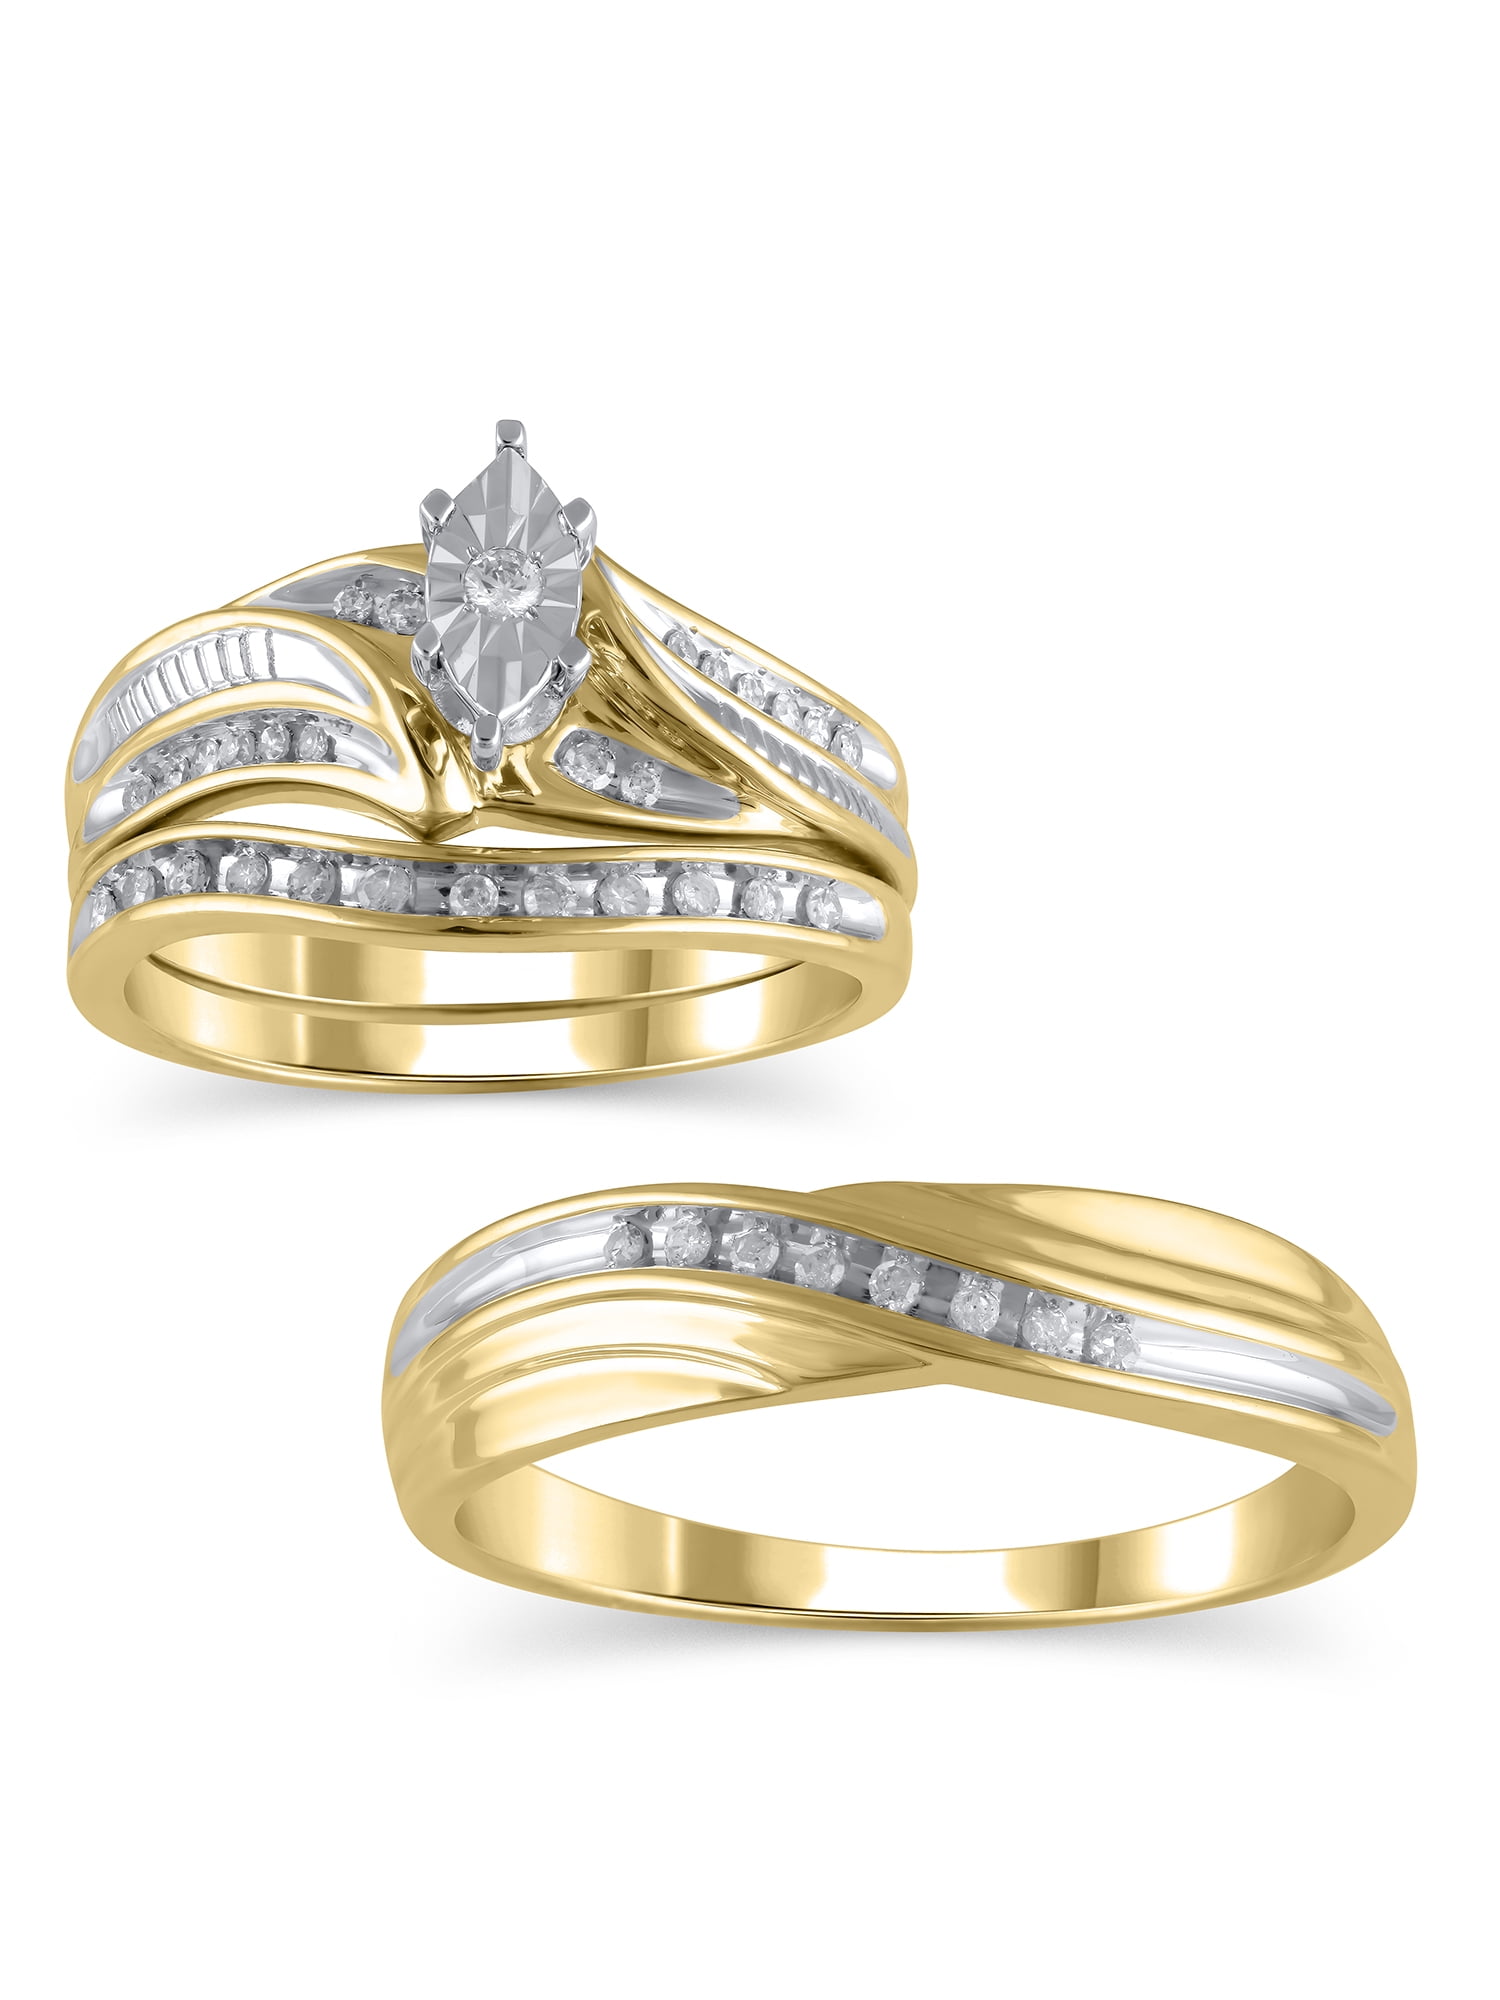 2 Ct Round Diamond Wedding Engagement Bridal Ring Set Women 10K Yellow Gold Over 